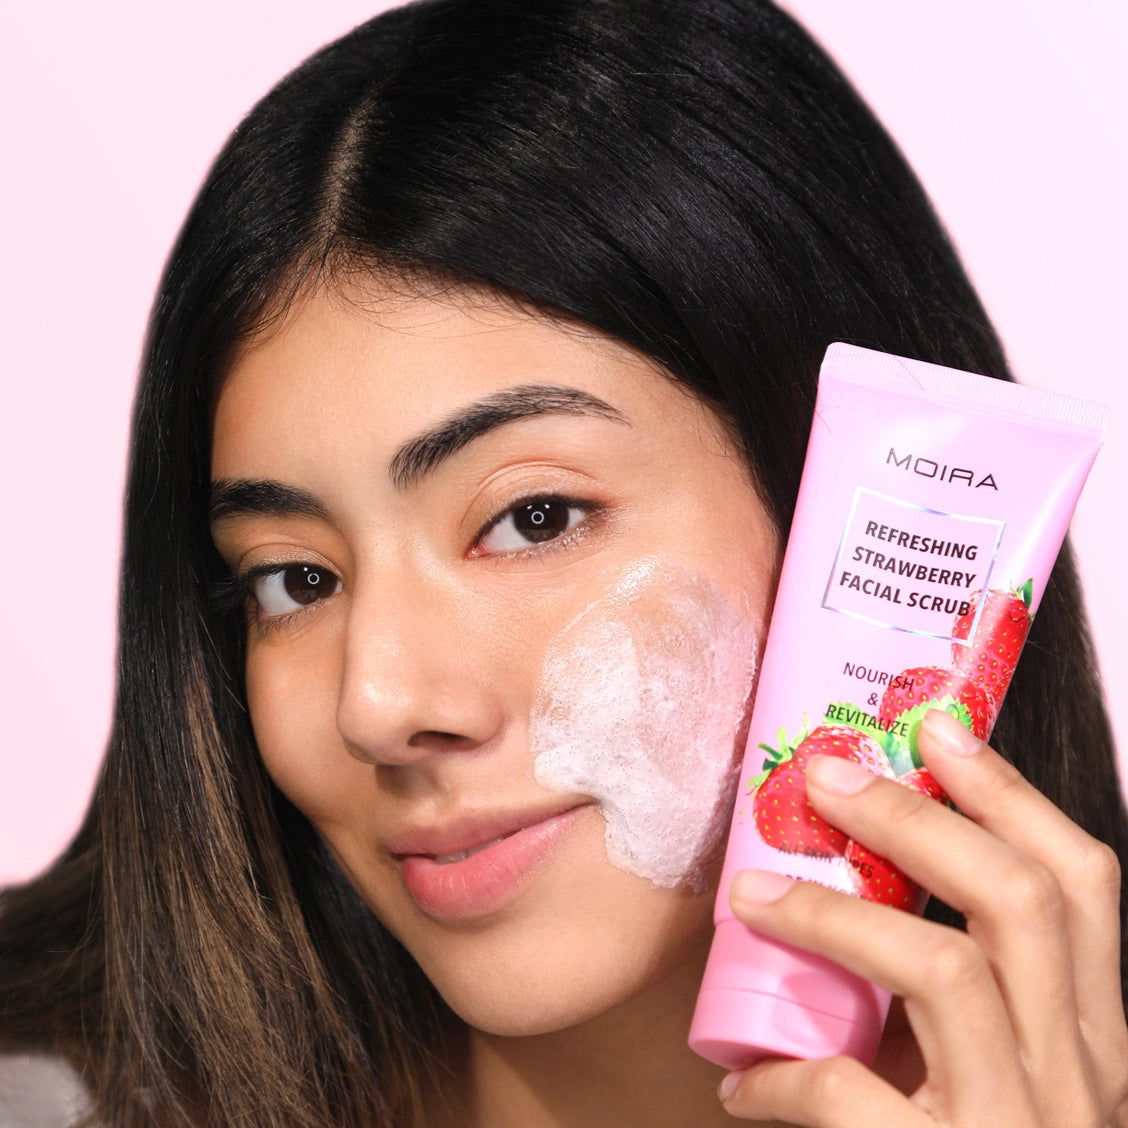 Moira Refreshing Strawberry Facial Scrub